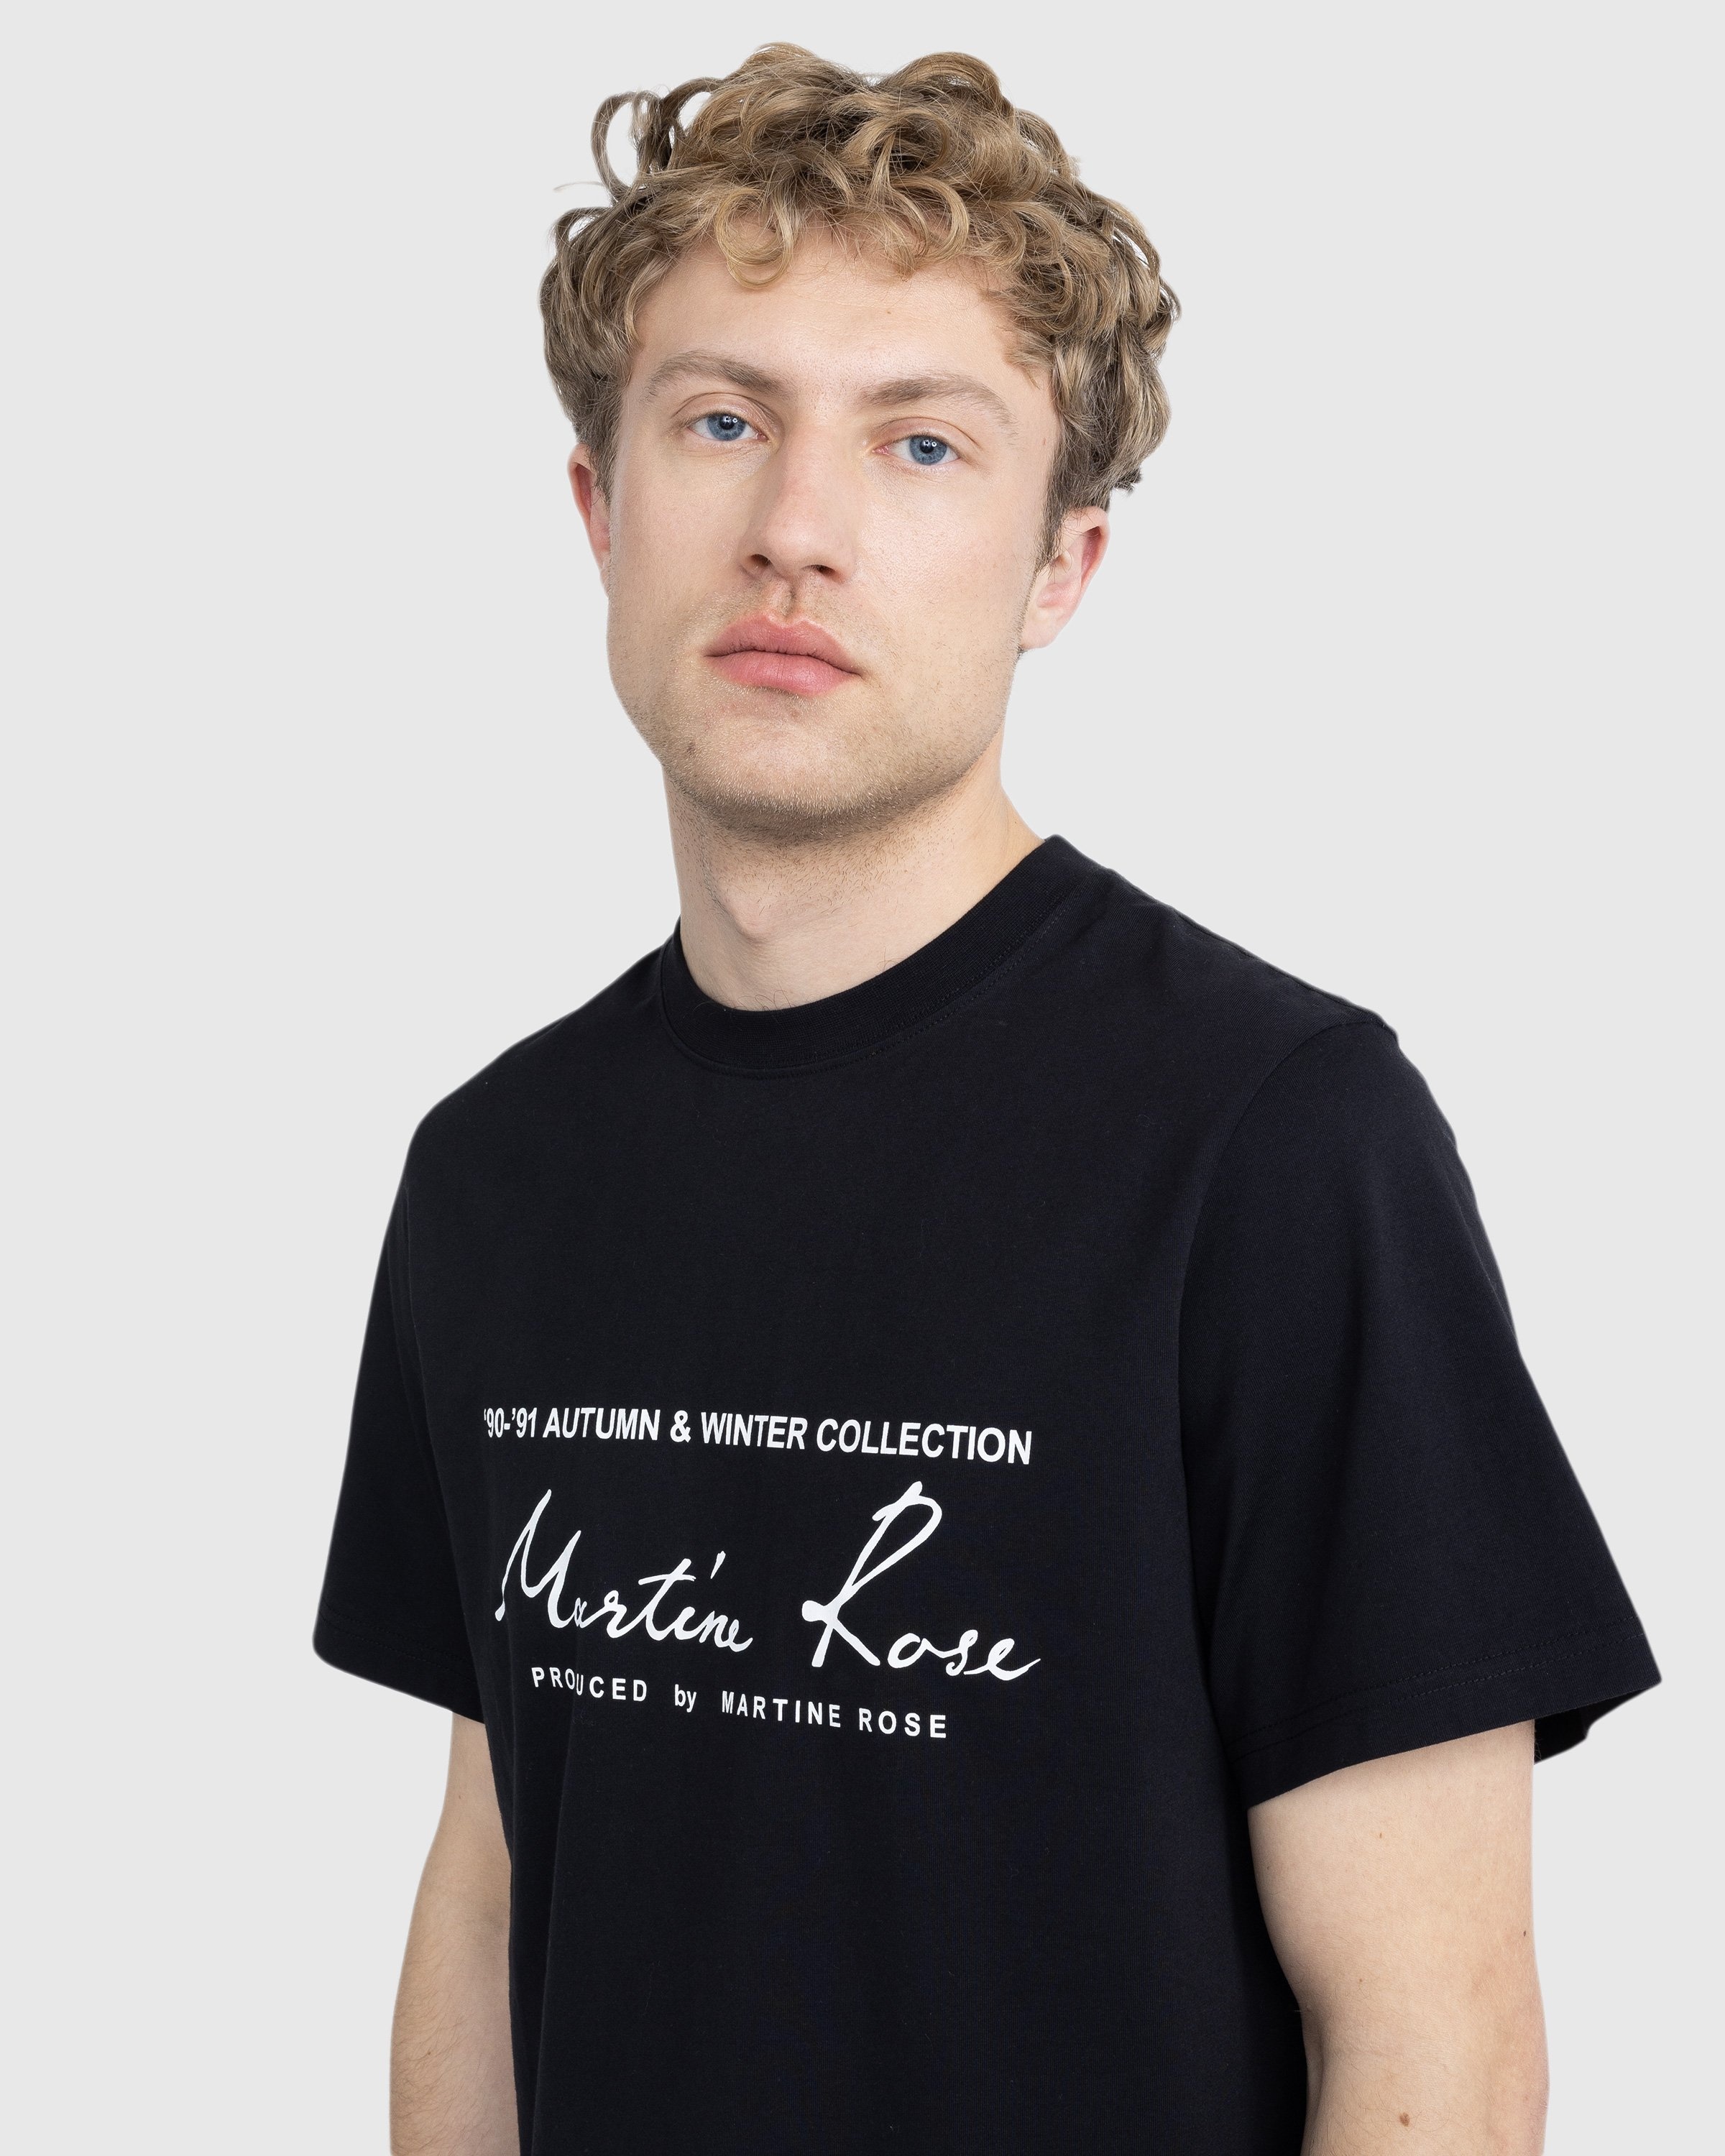 Martine Rose – Classic S/S T-Shirt Black | Highsnobiety Shop